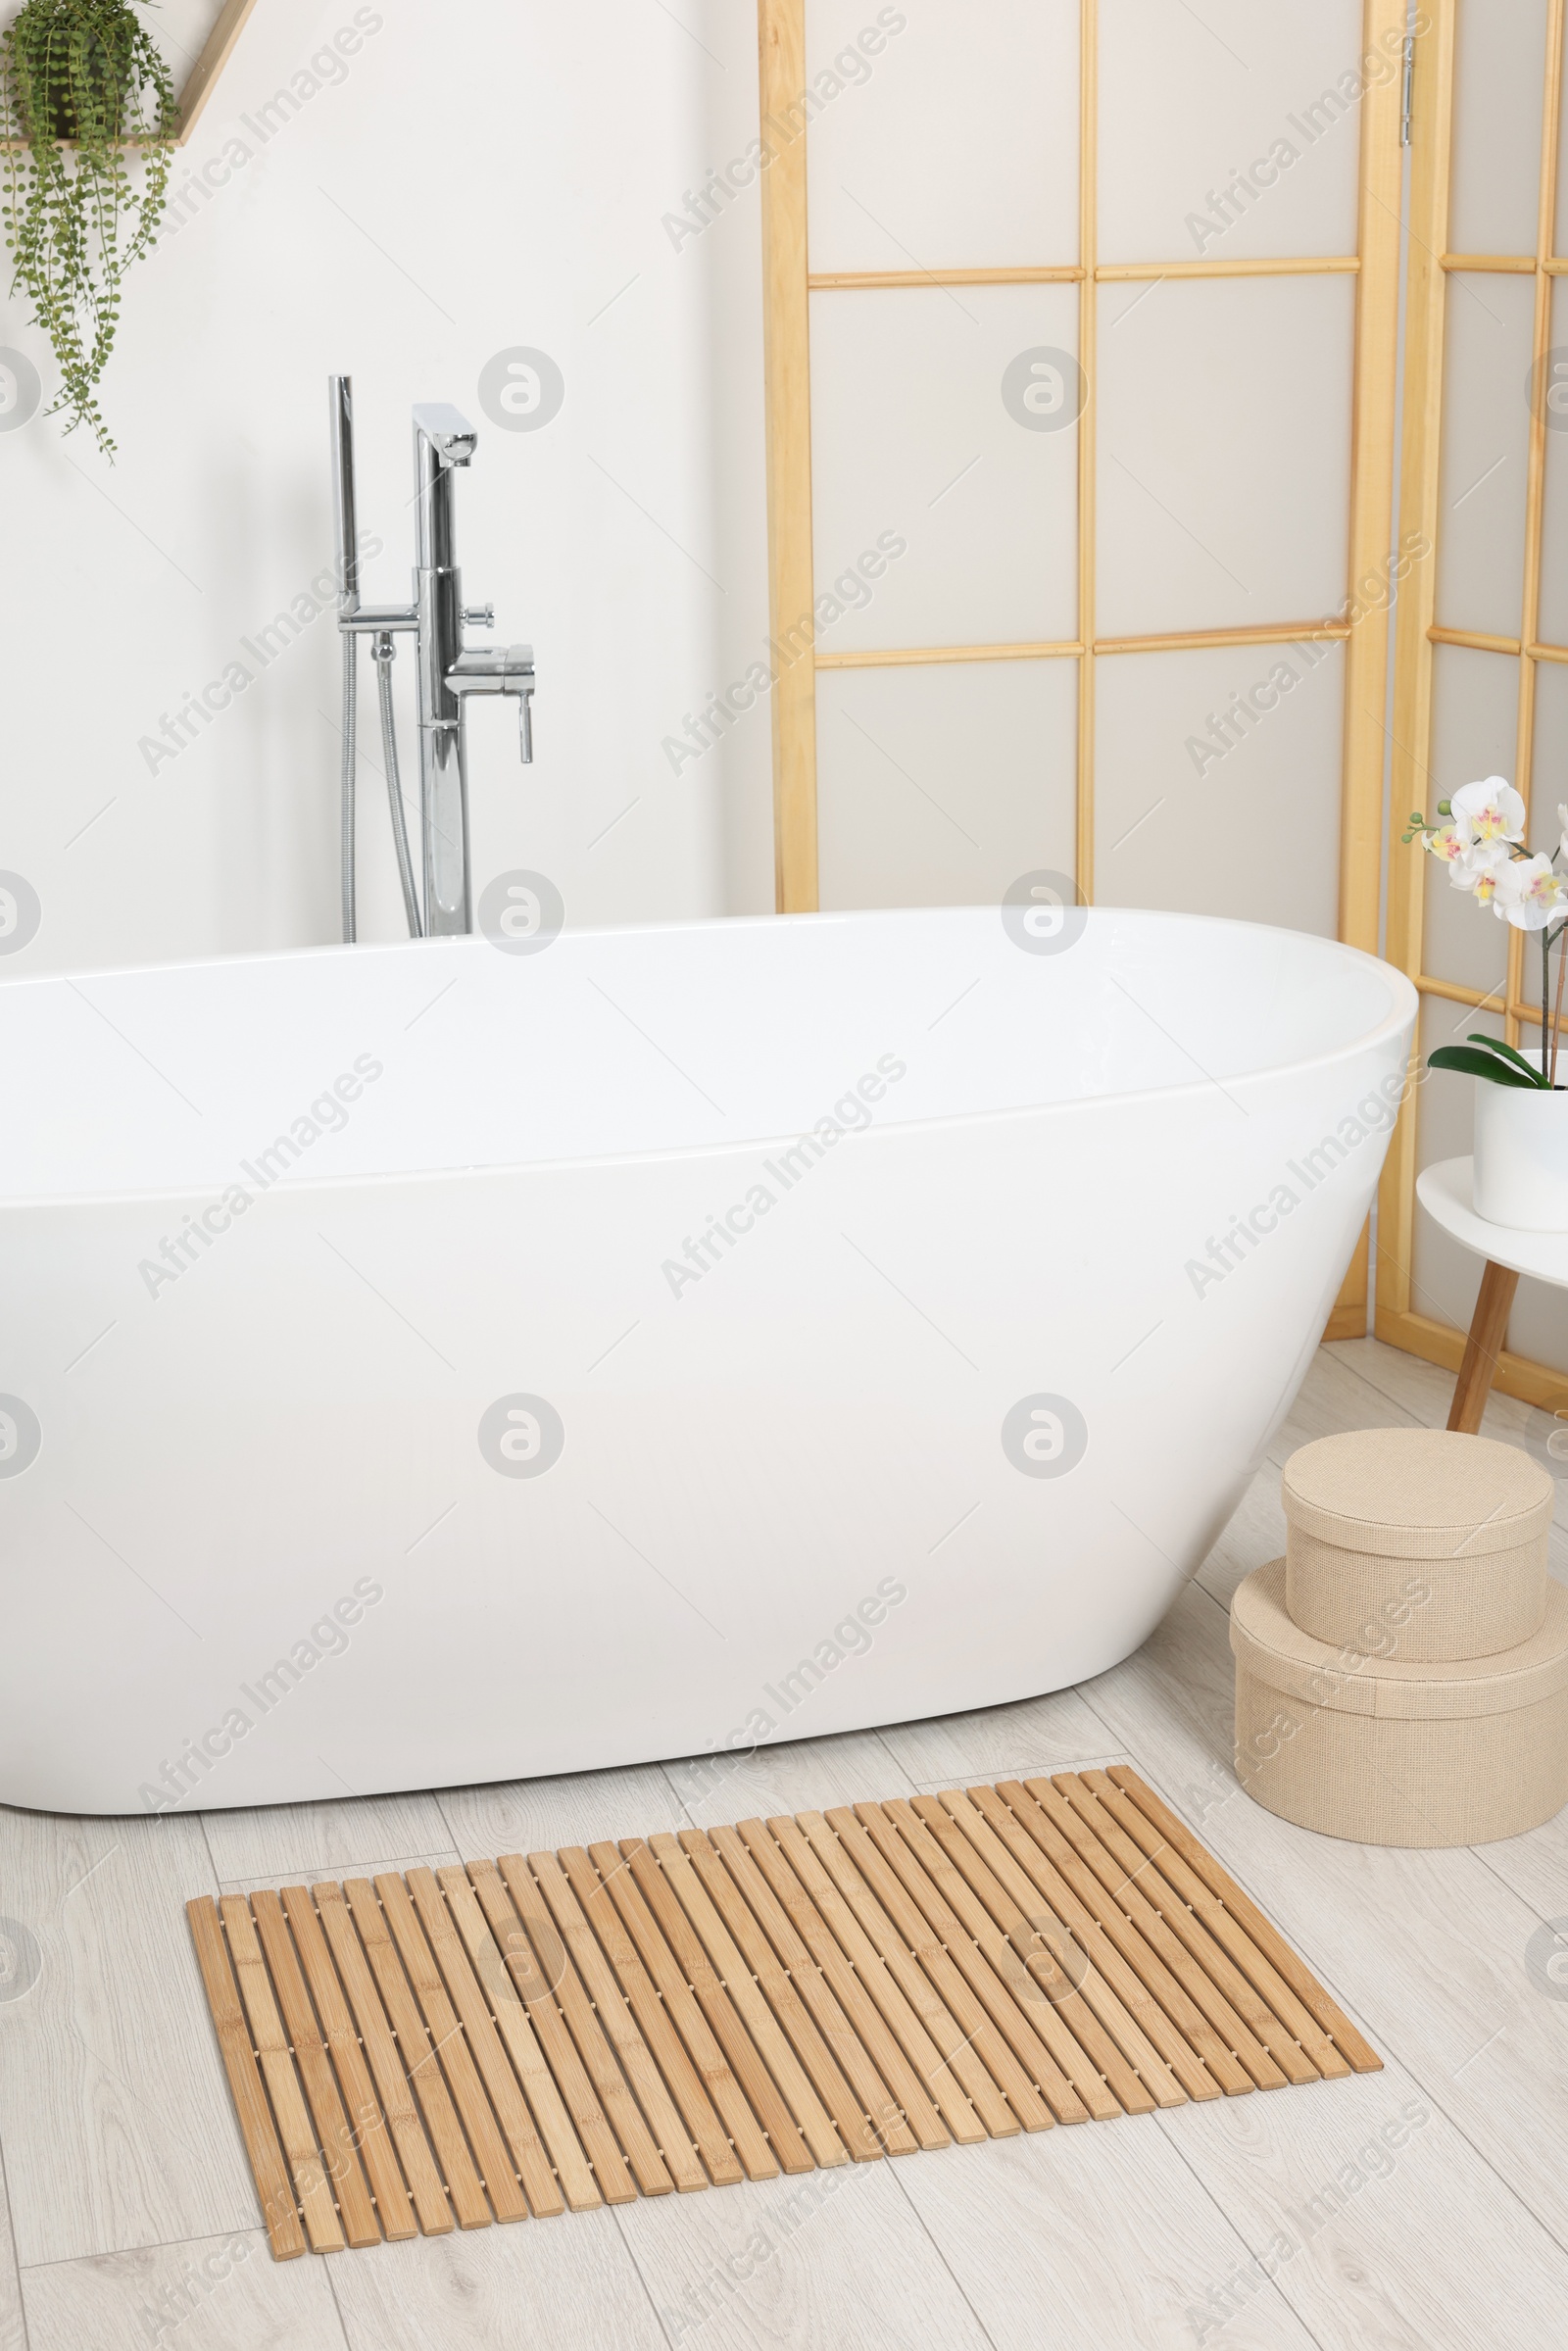 Photo of Stylish bathroom interior with bath tub, houseplants and bamboo mat